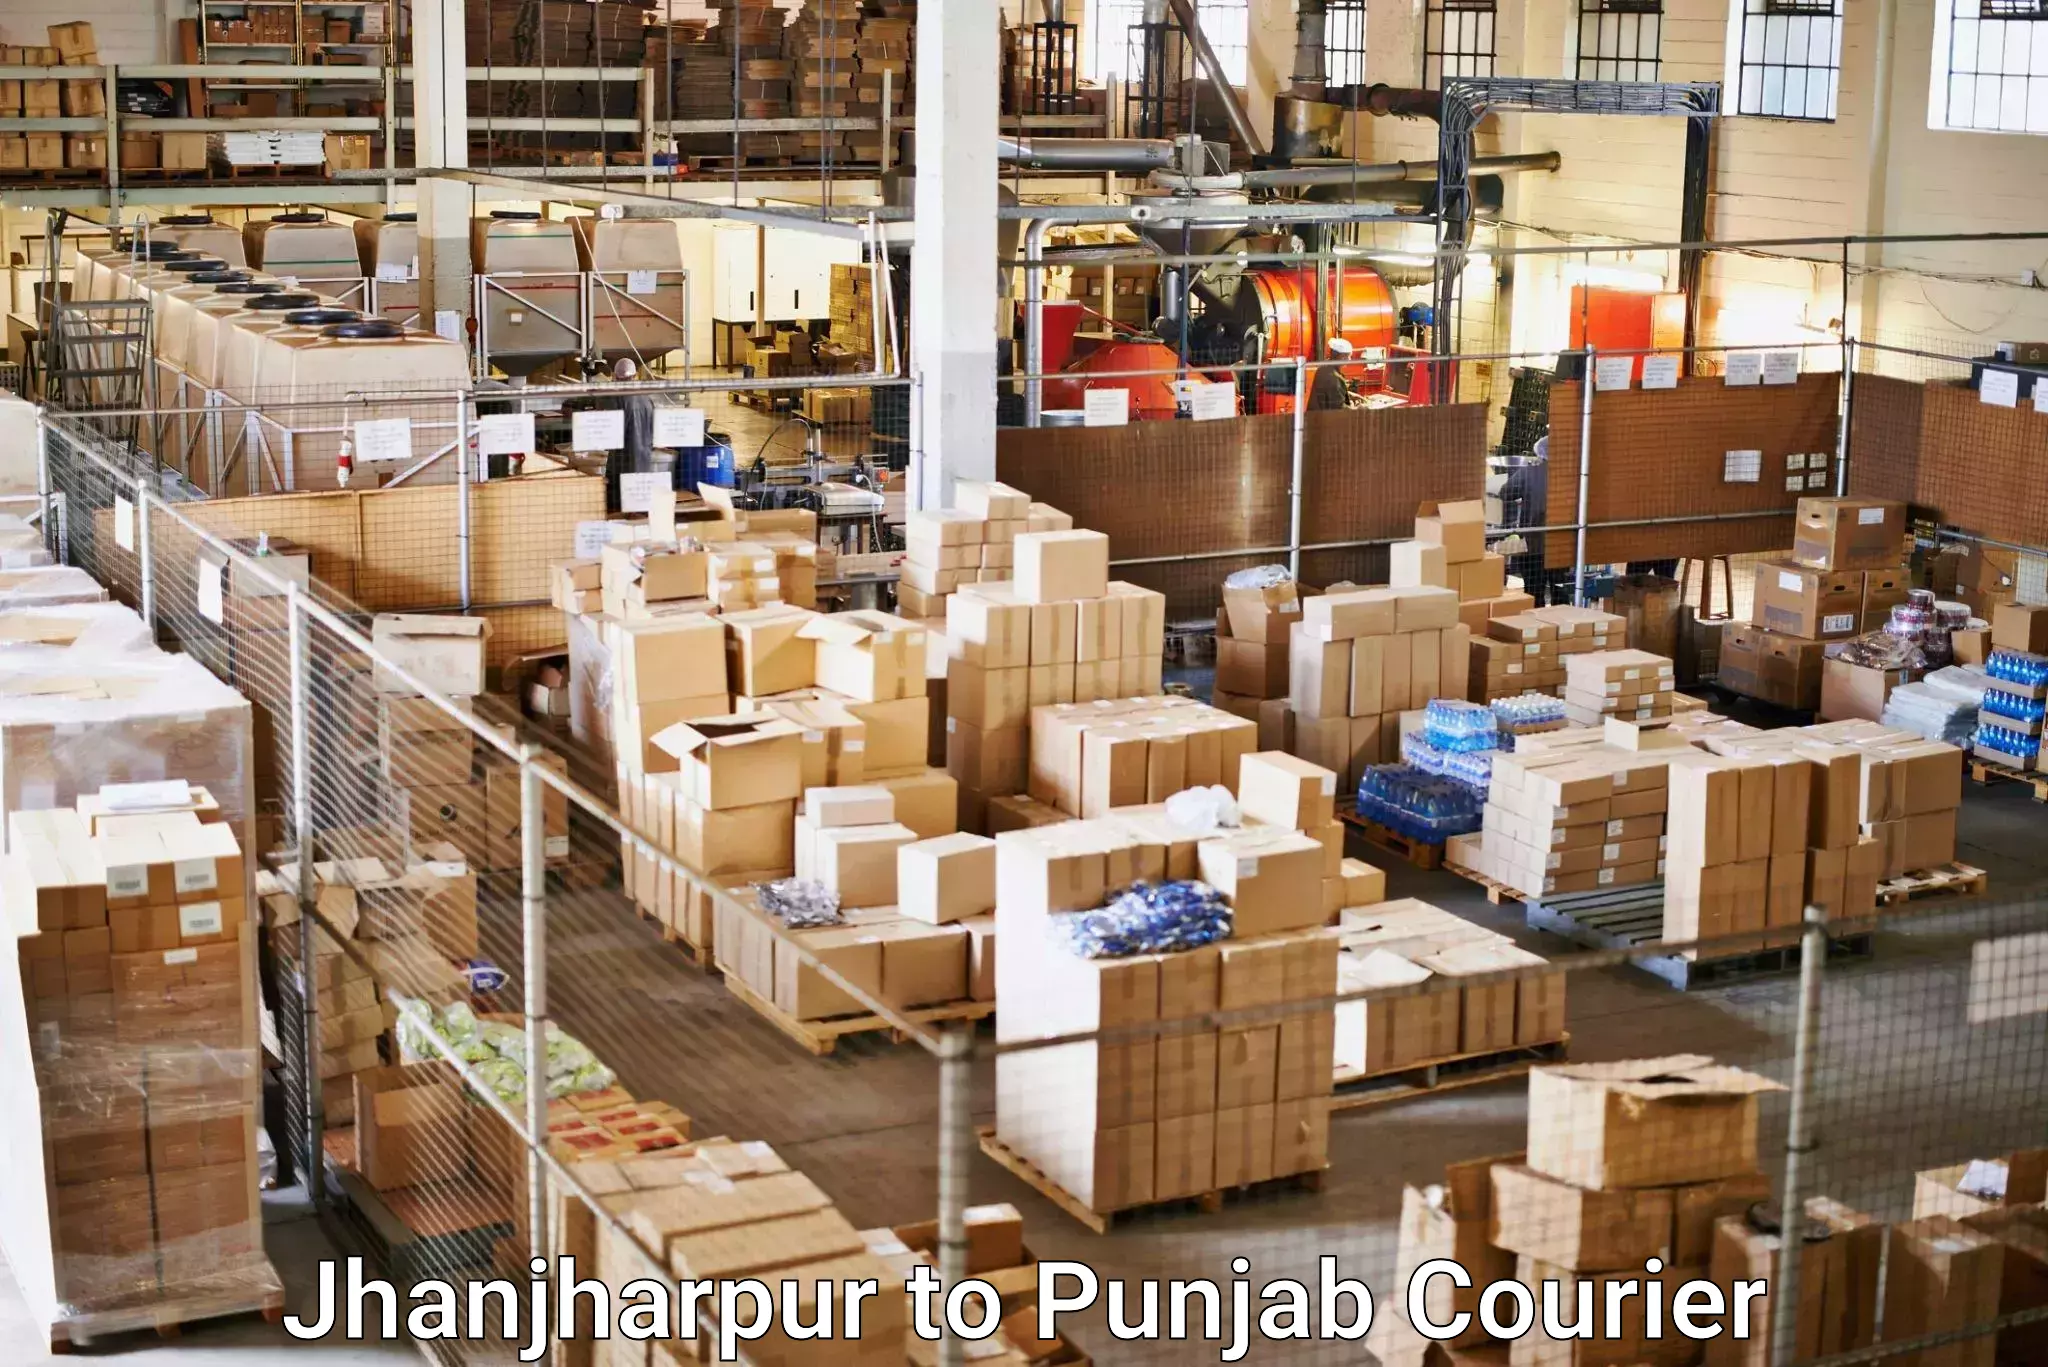 On-demand shipping options Jhanjharpur to Batala